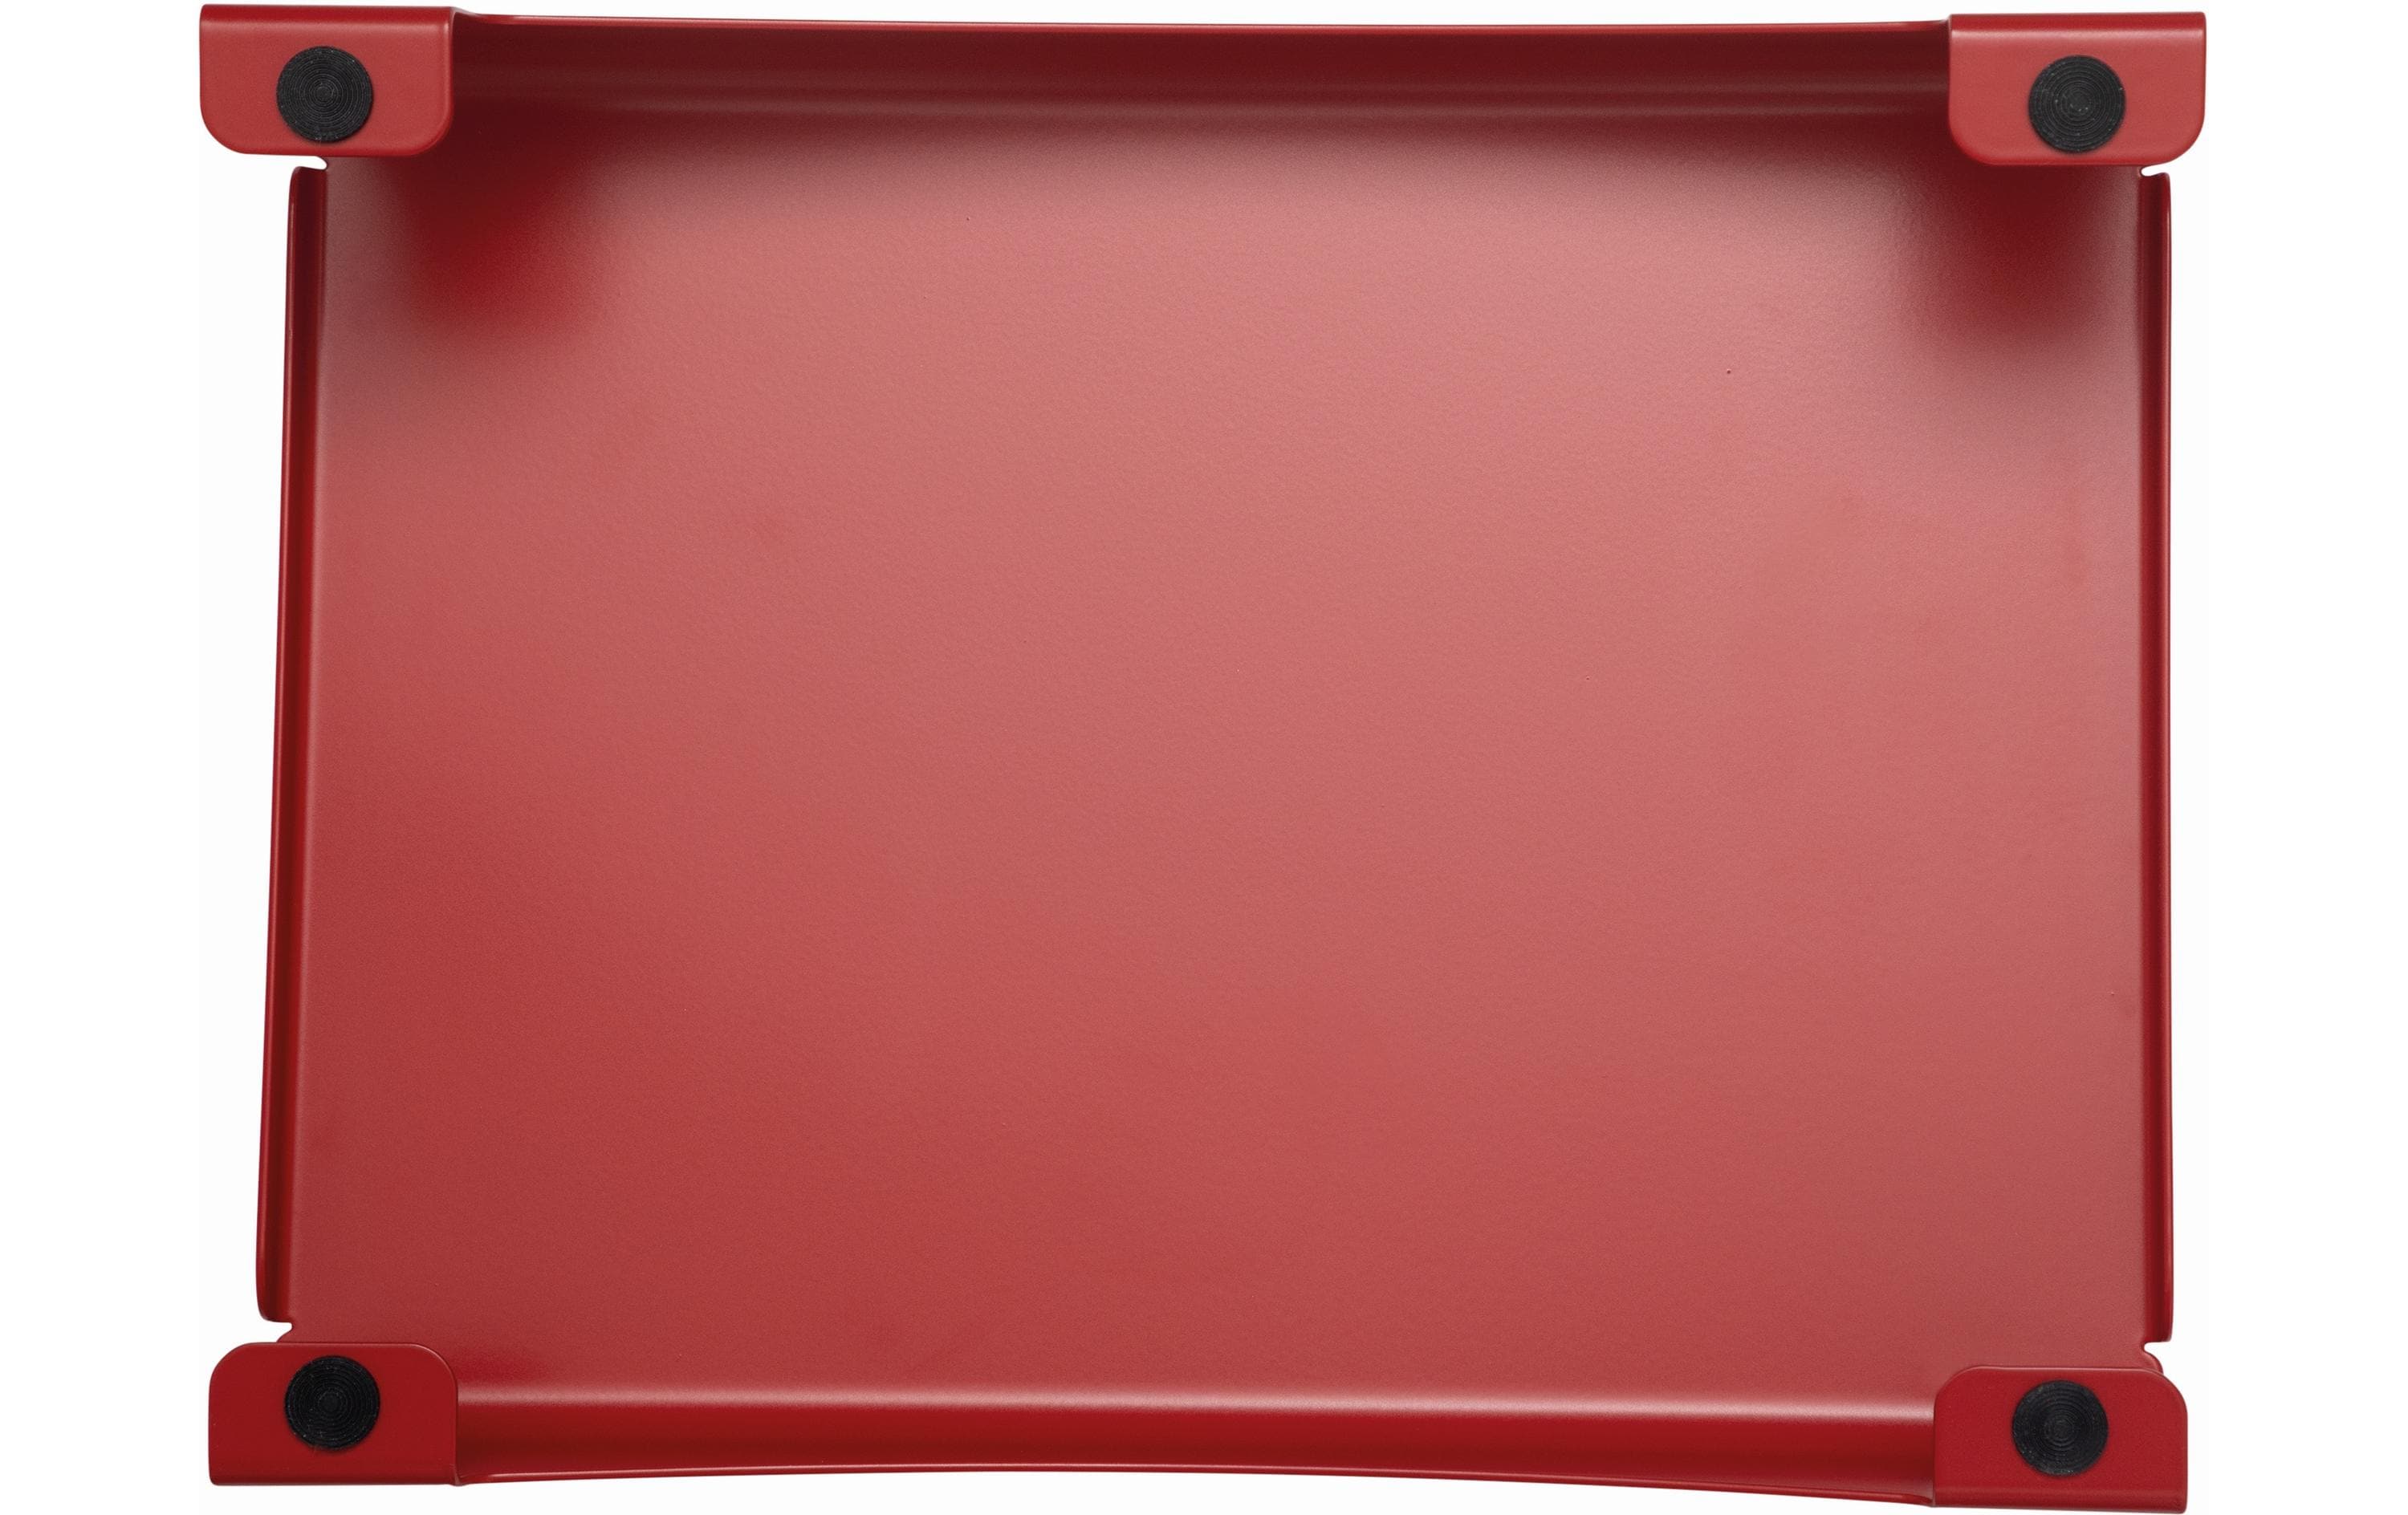 Maul Fussstütze Flair 40 x 30 cm, Rot